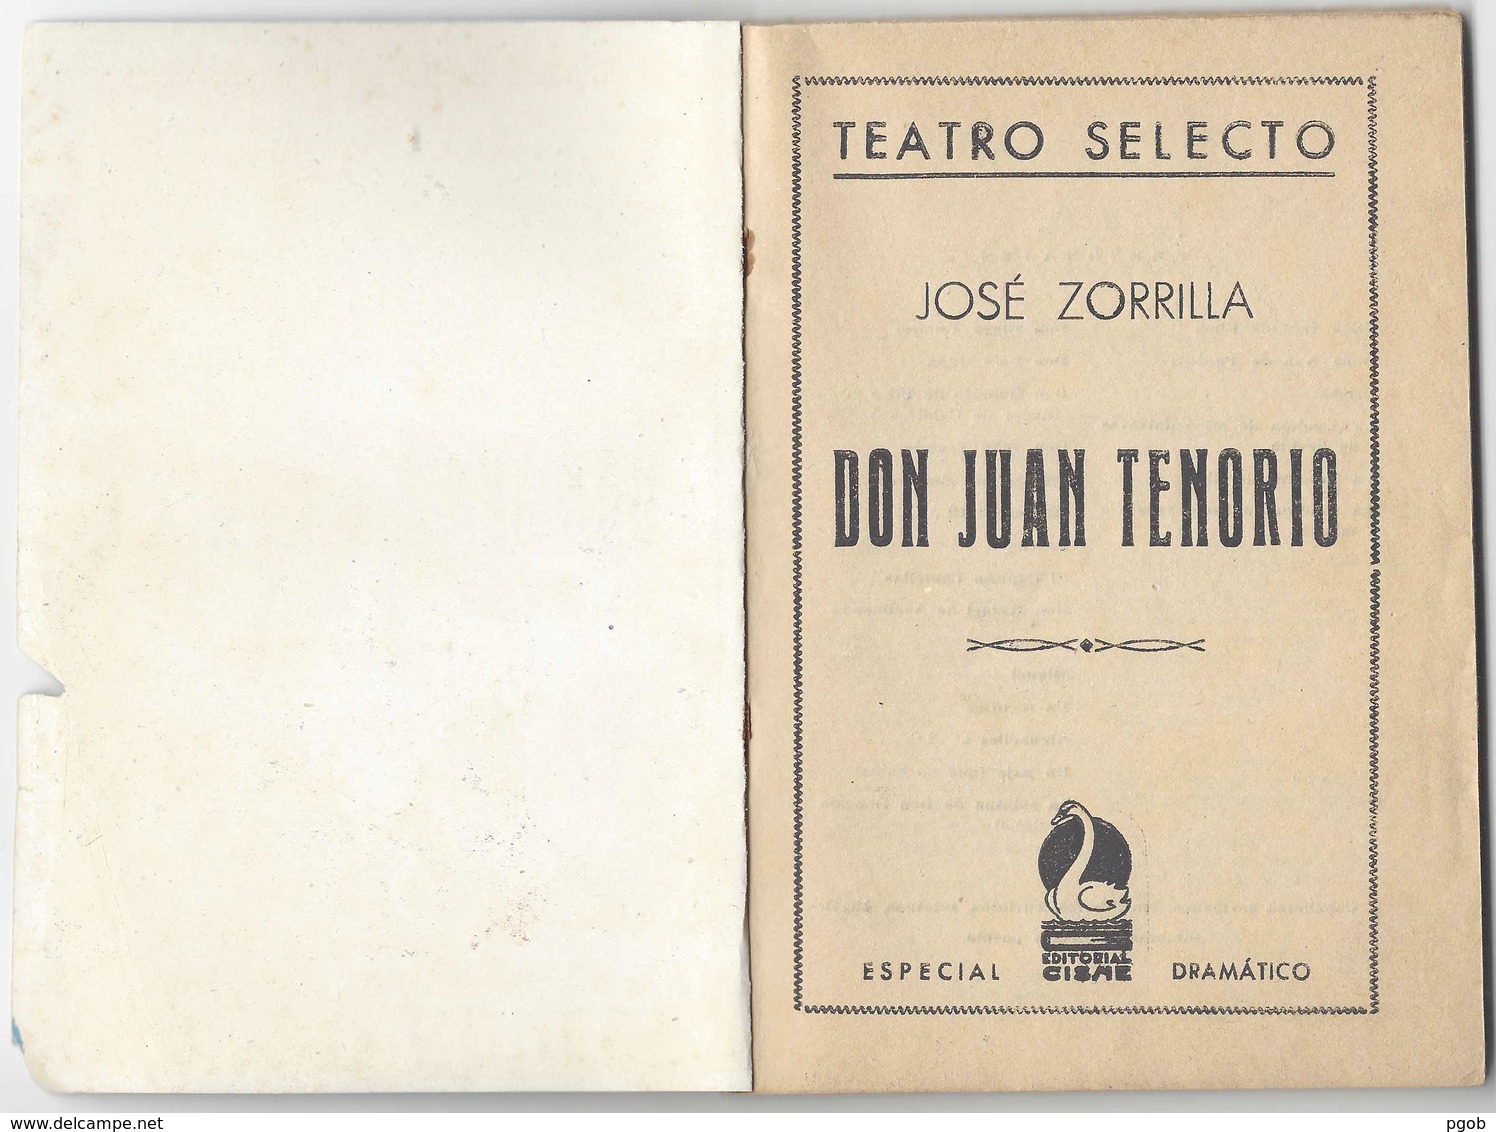 DON JUAN TENORIO. José Zorrilla. Teatro Selecto - Theatre